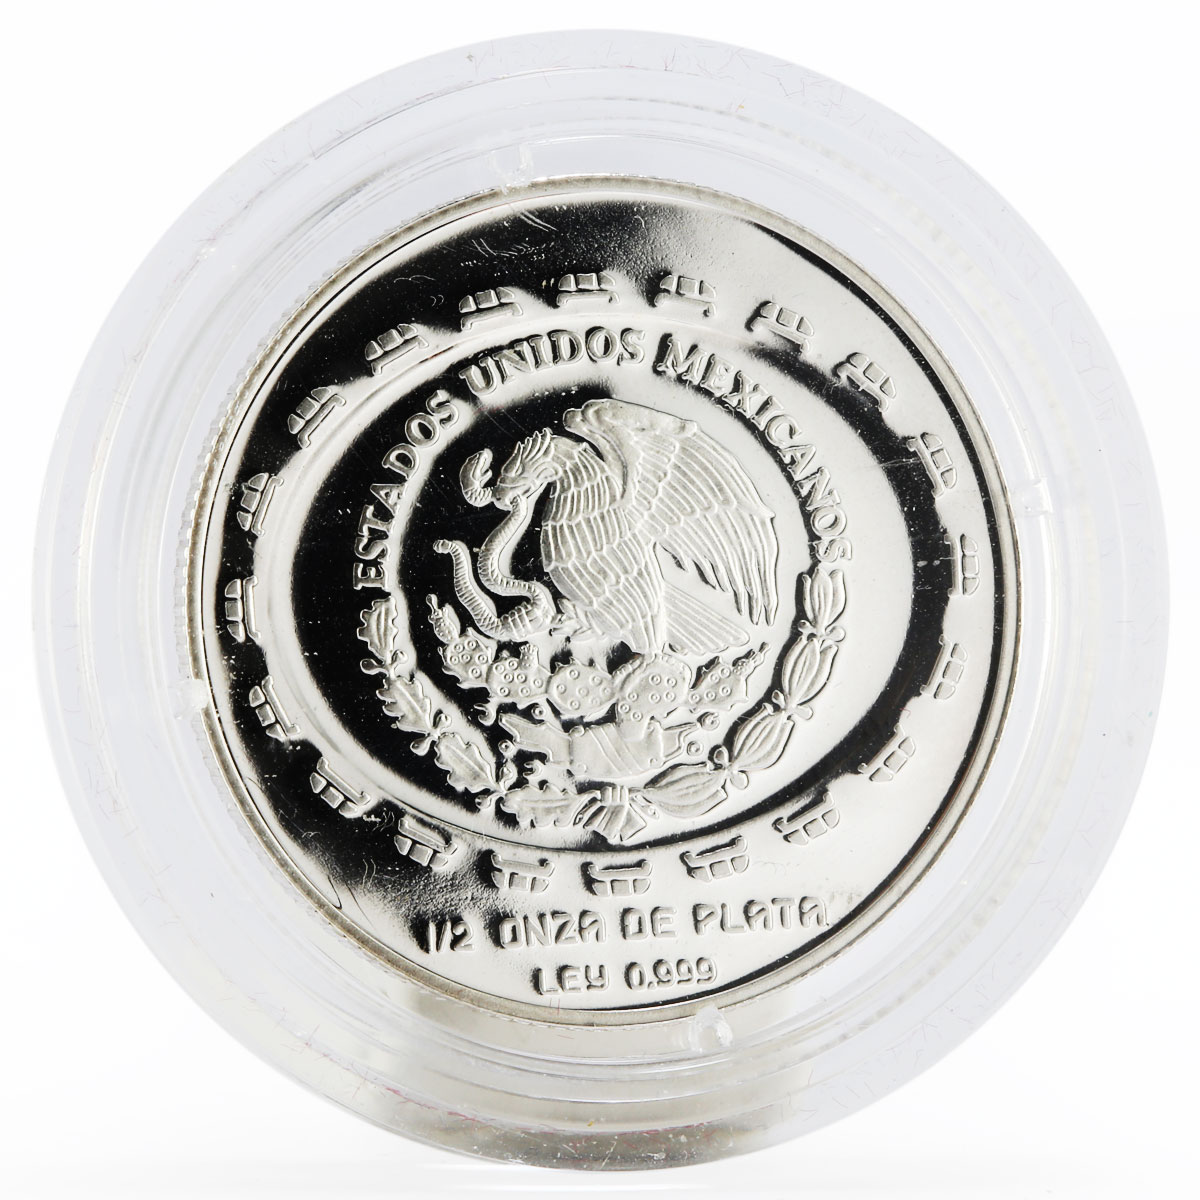 Mexico 2 peso Disco De La Muerte Teotihuacan Series proof silver coin 1997